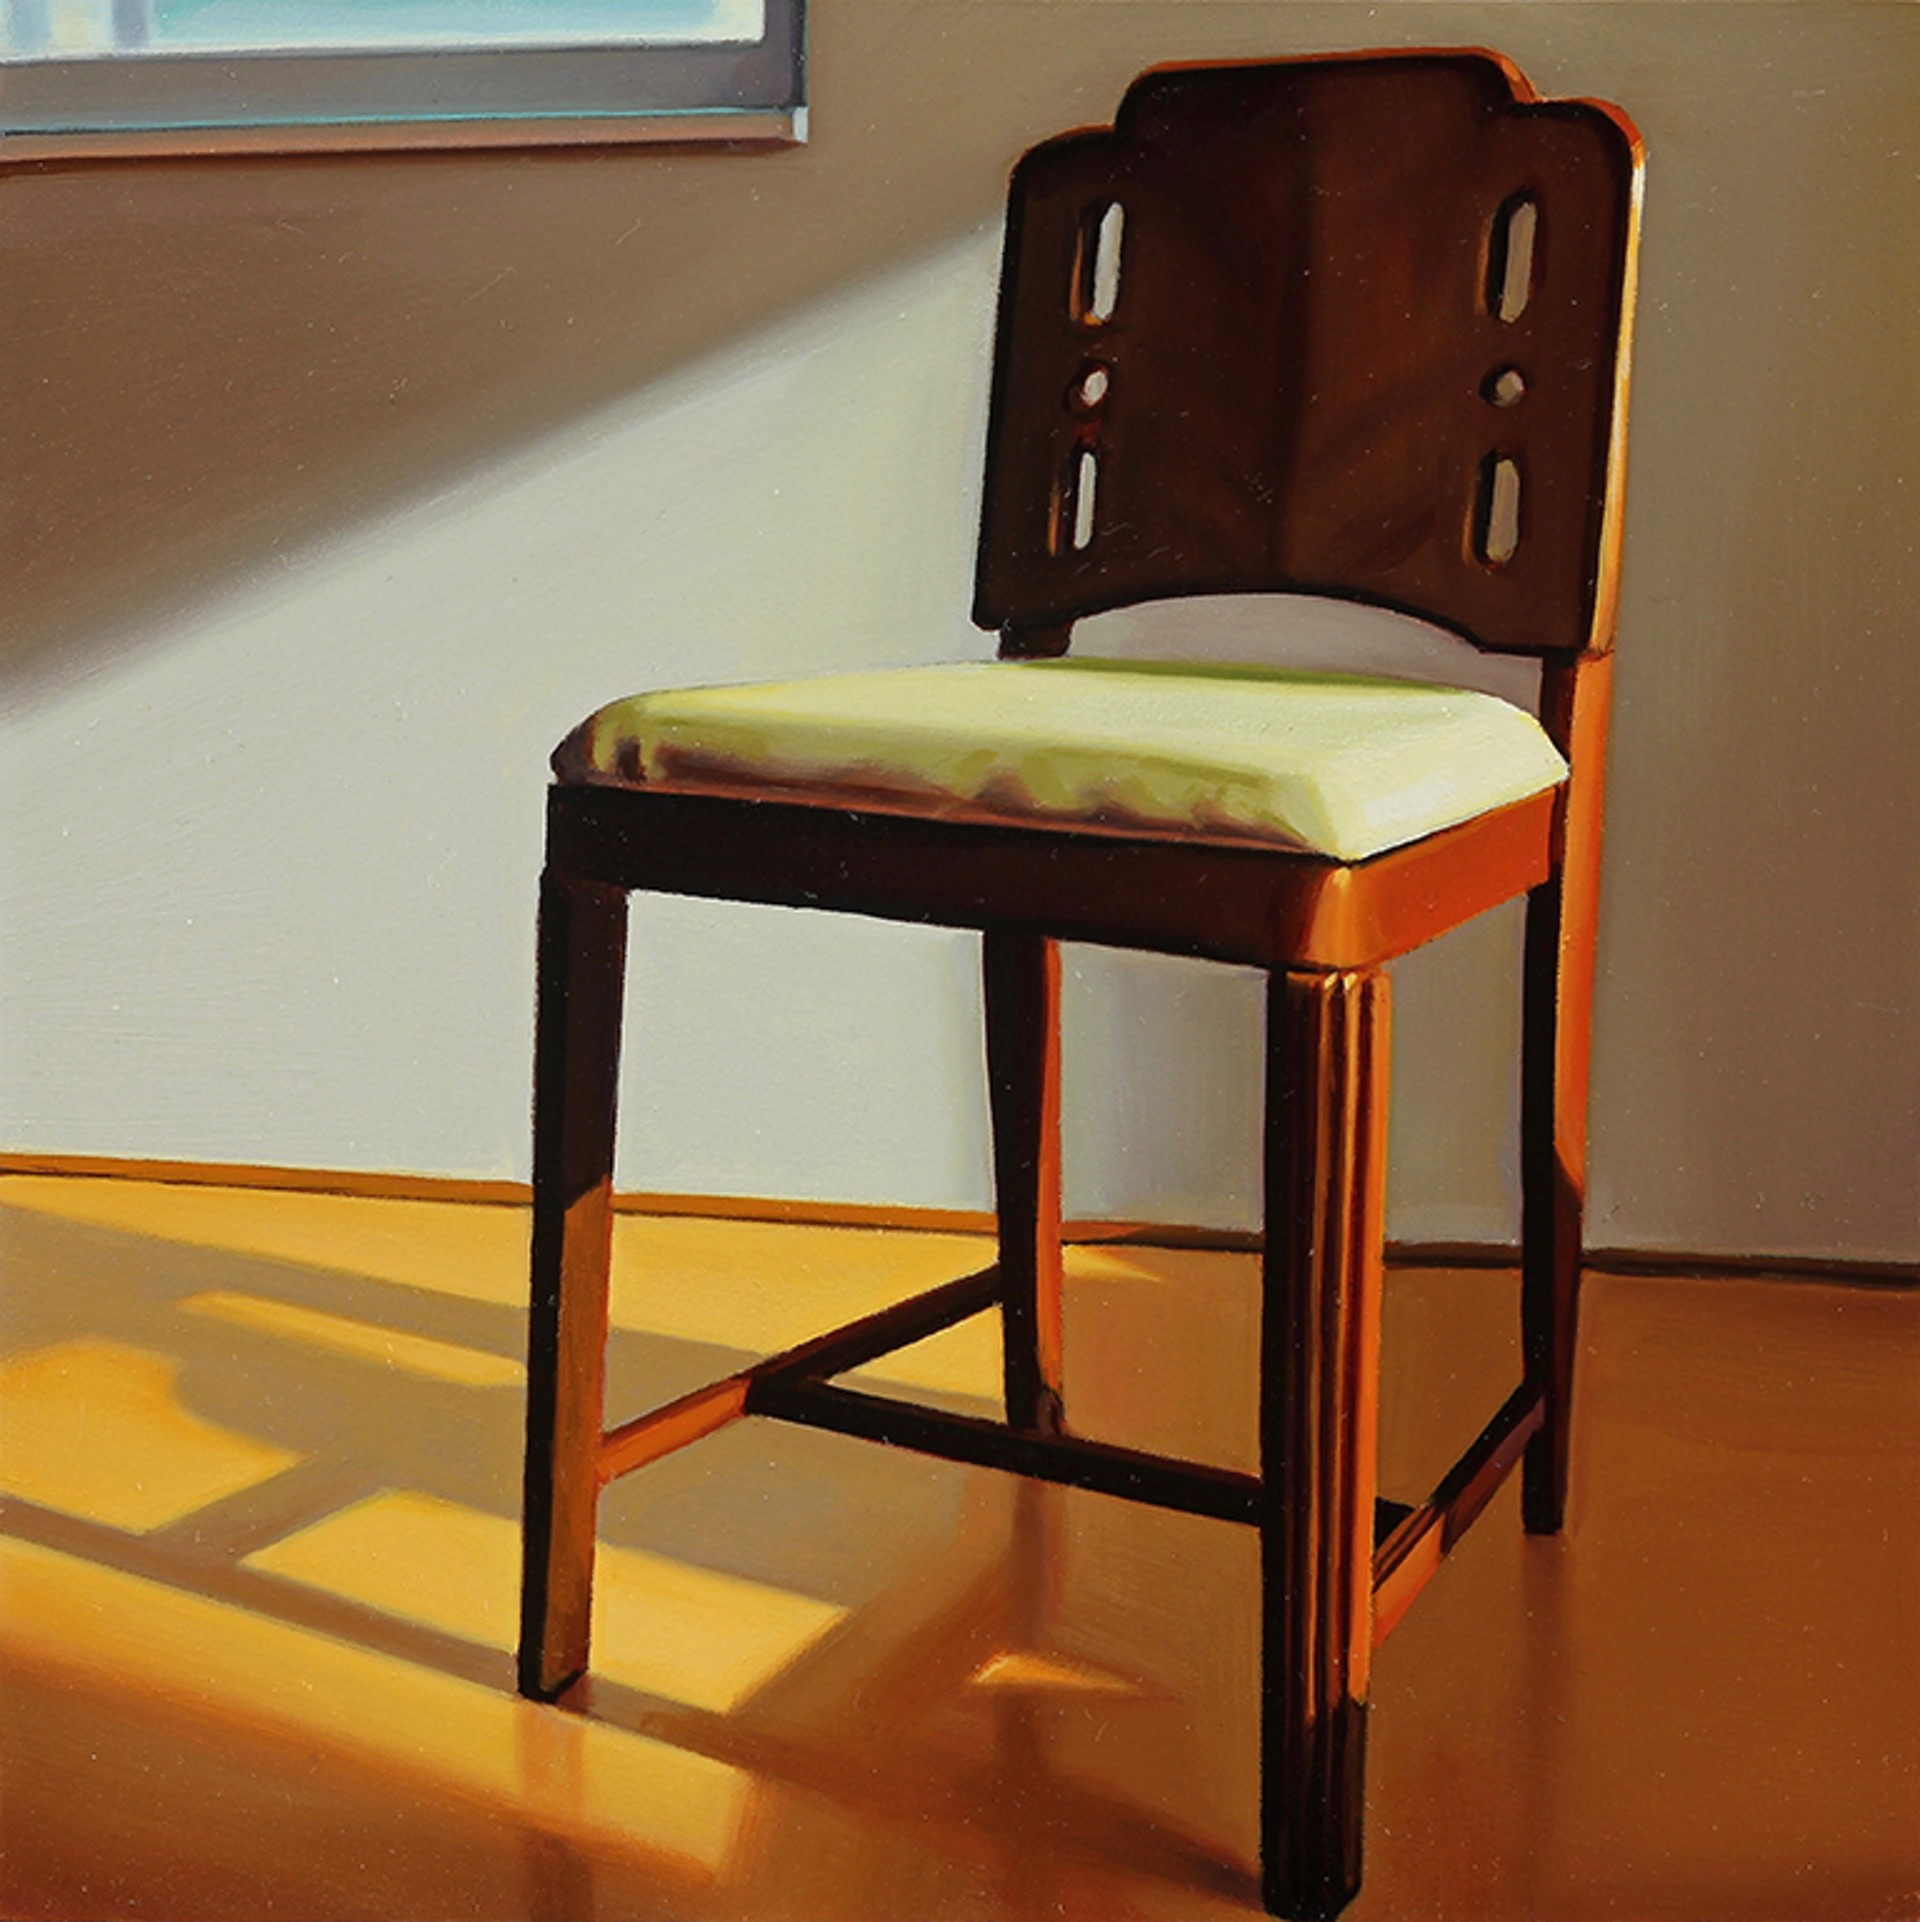 Liberty Chair #8 by Ada Sadler